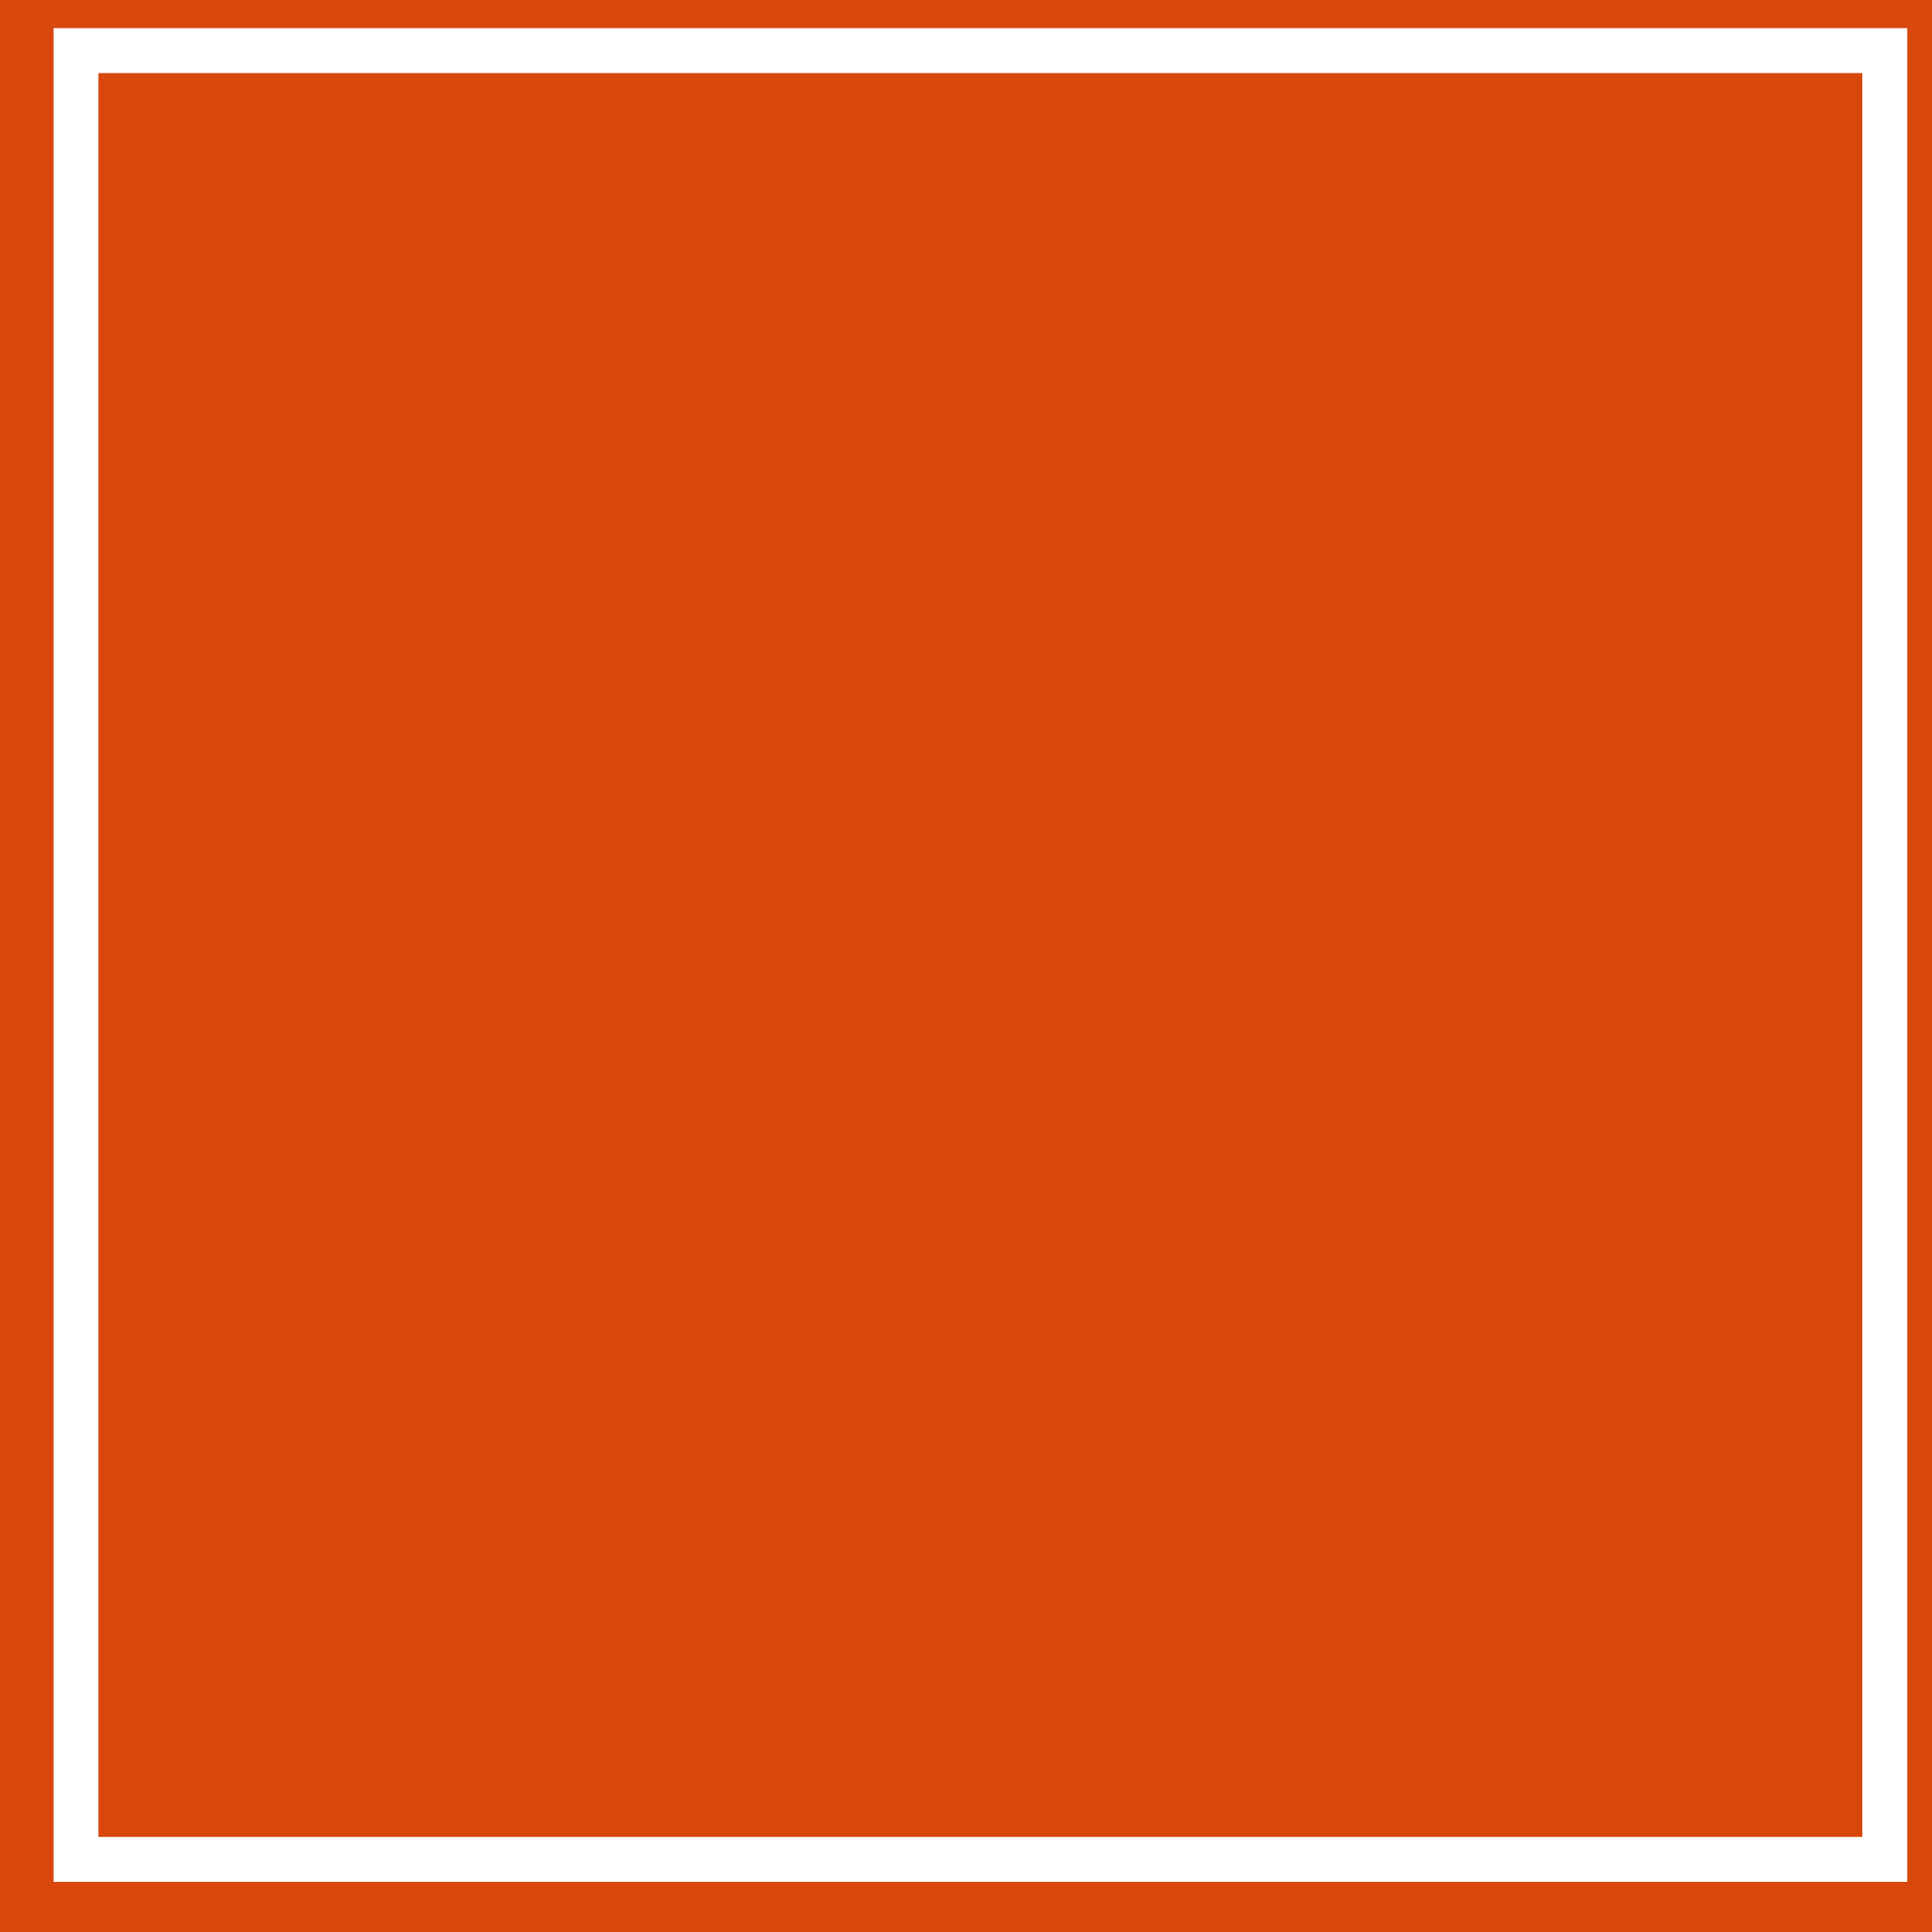 color naranja